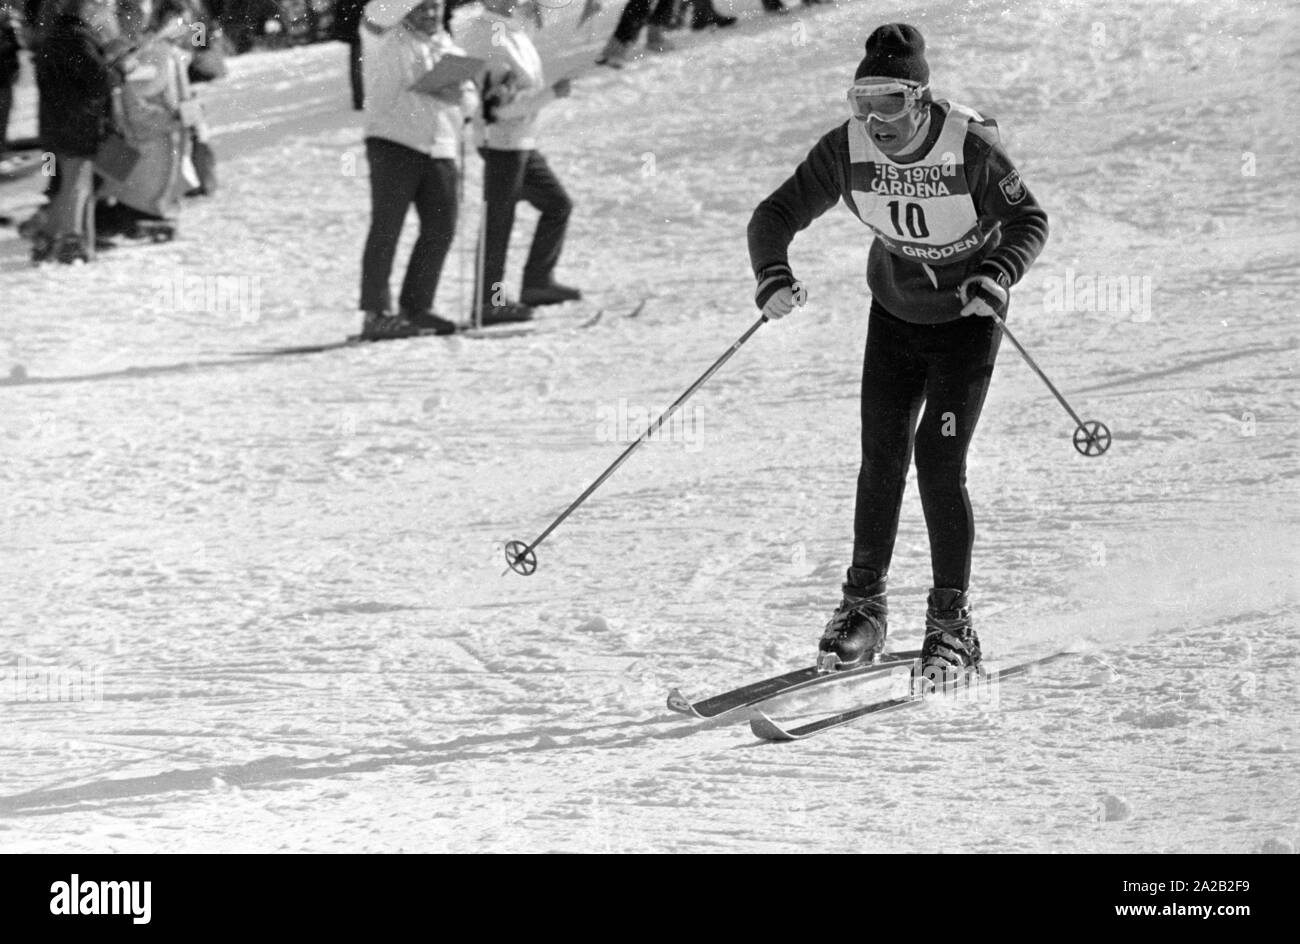 The Alpine World Ski Championships took place in Val Gardena ...